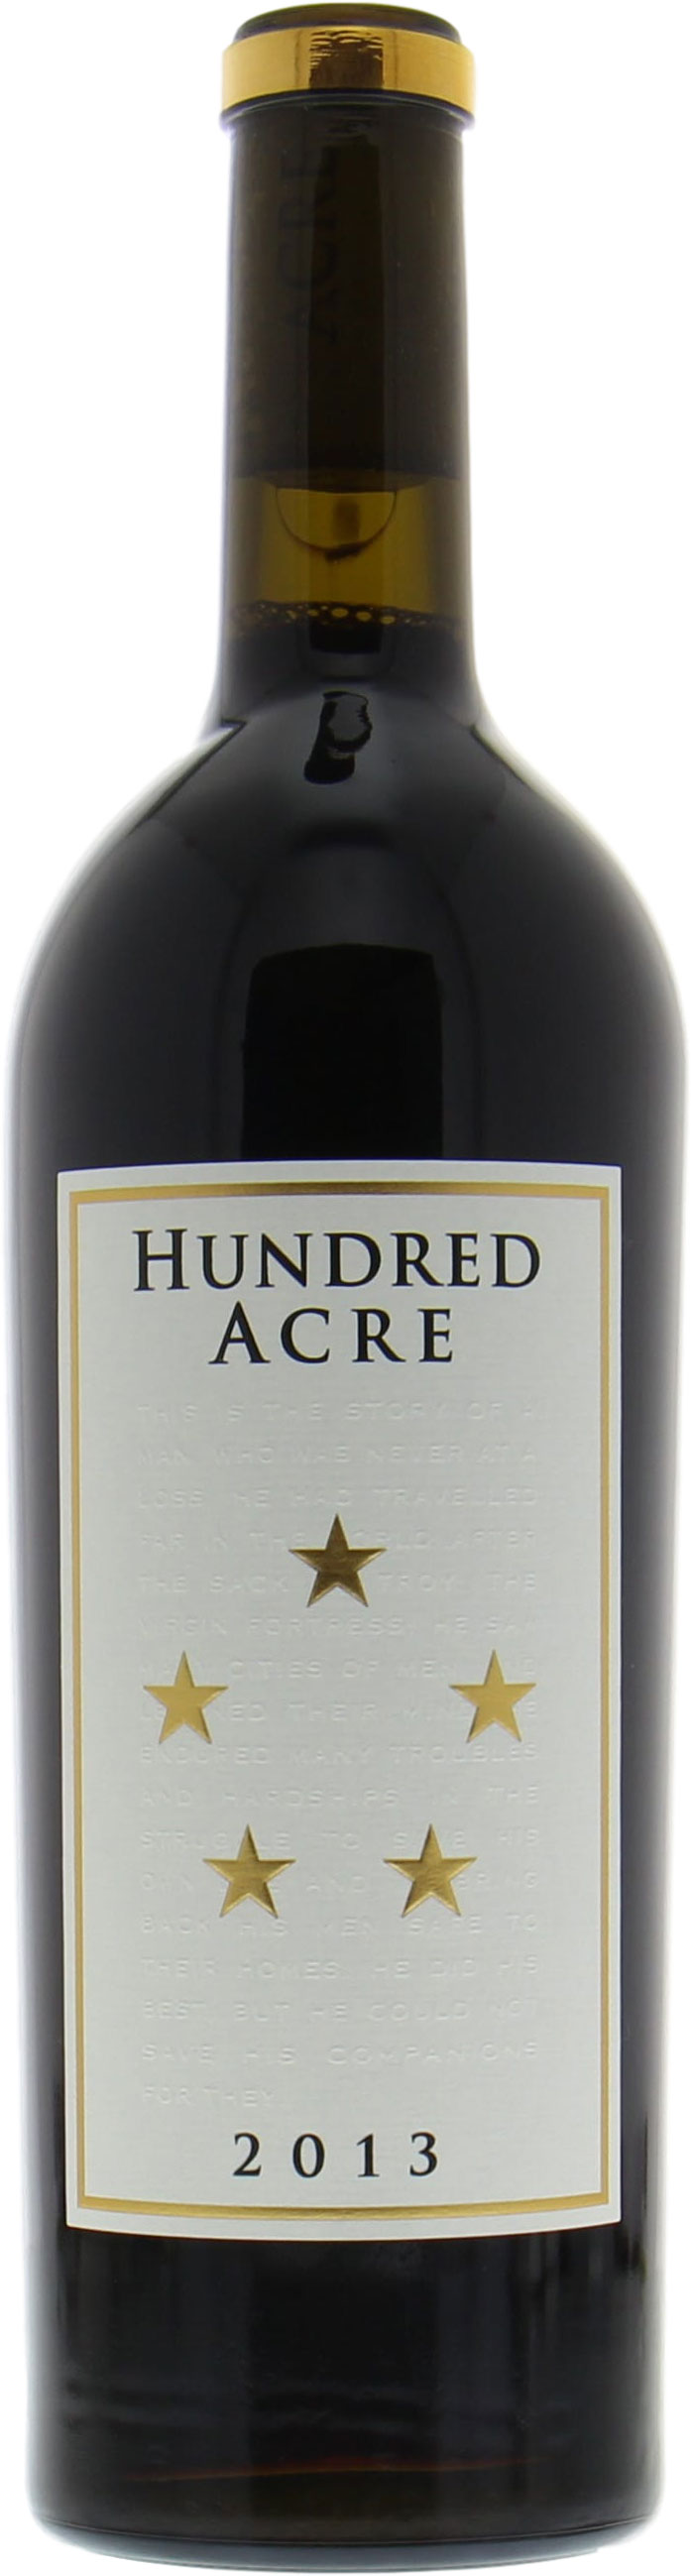 Hundred Acre Vineyard - Cabernet Sauvignon Kayli Morgan Vineyard 2013 Perfect